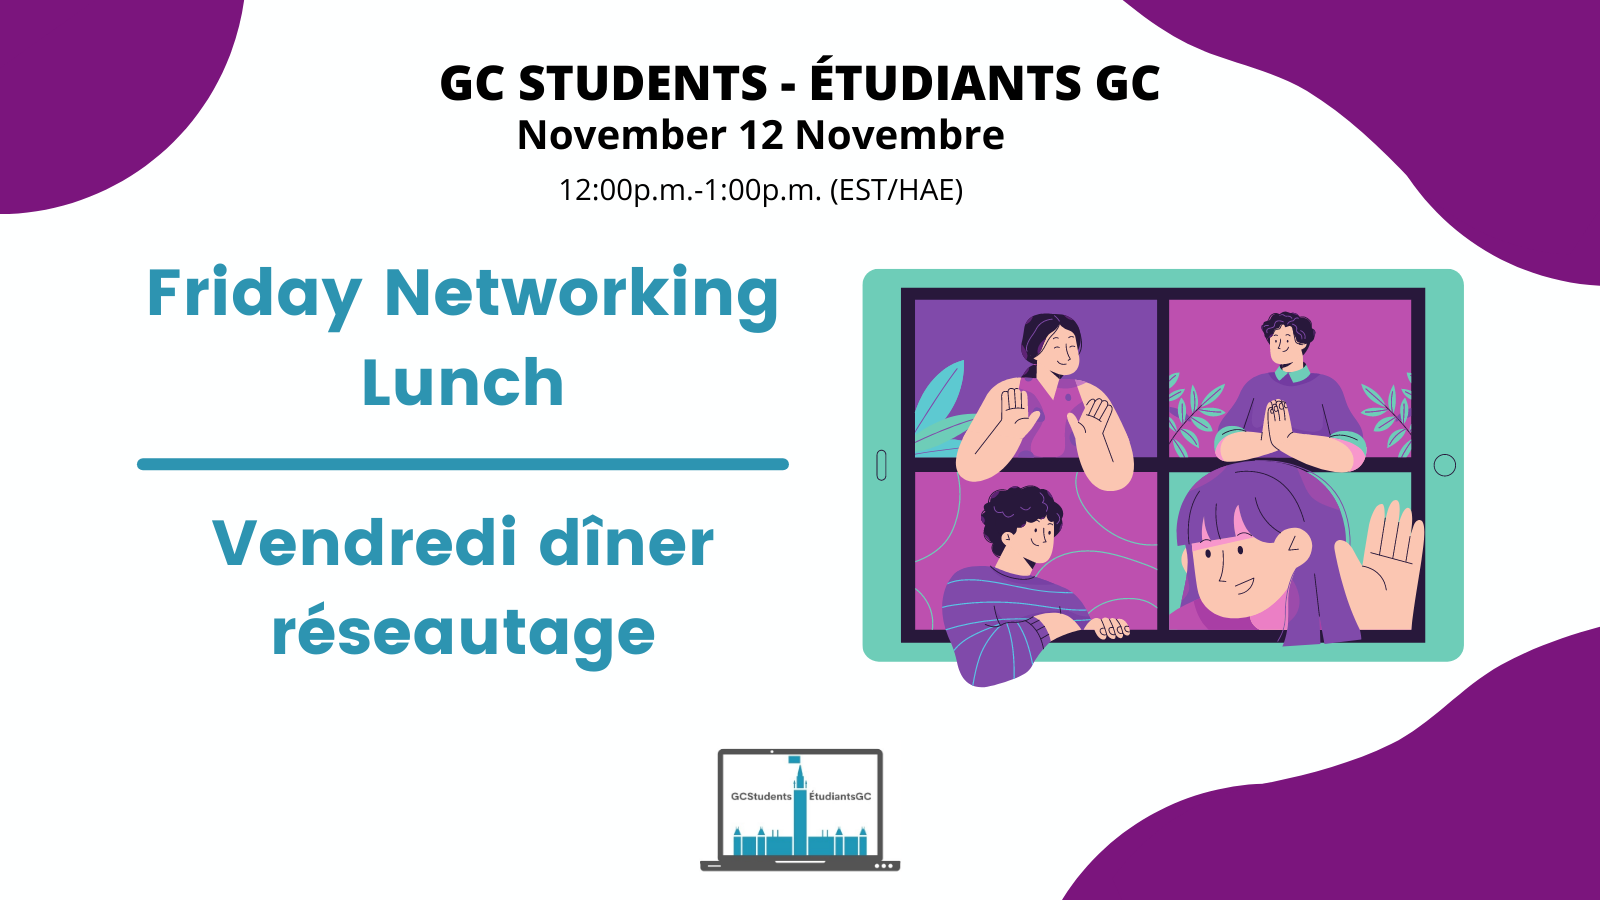 Promo image for November 12, Friday Networking Lunch - Image promo pour Vendredi dîner réseautage du 12 novembre